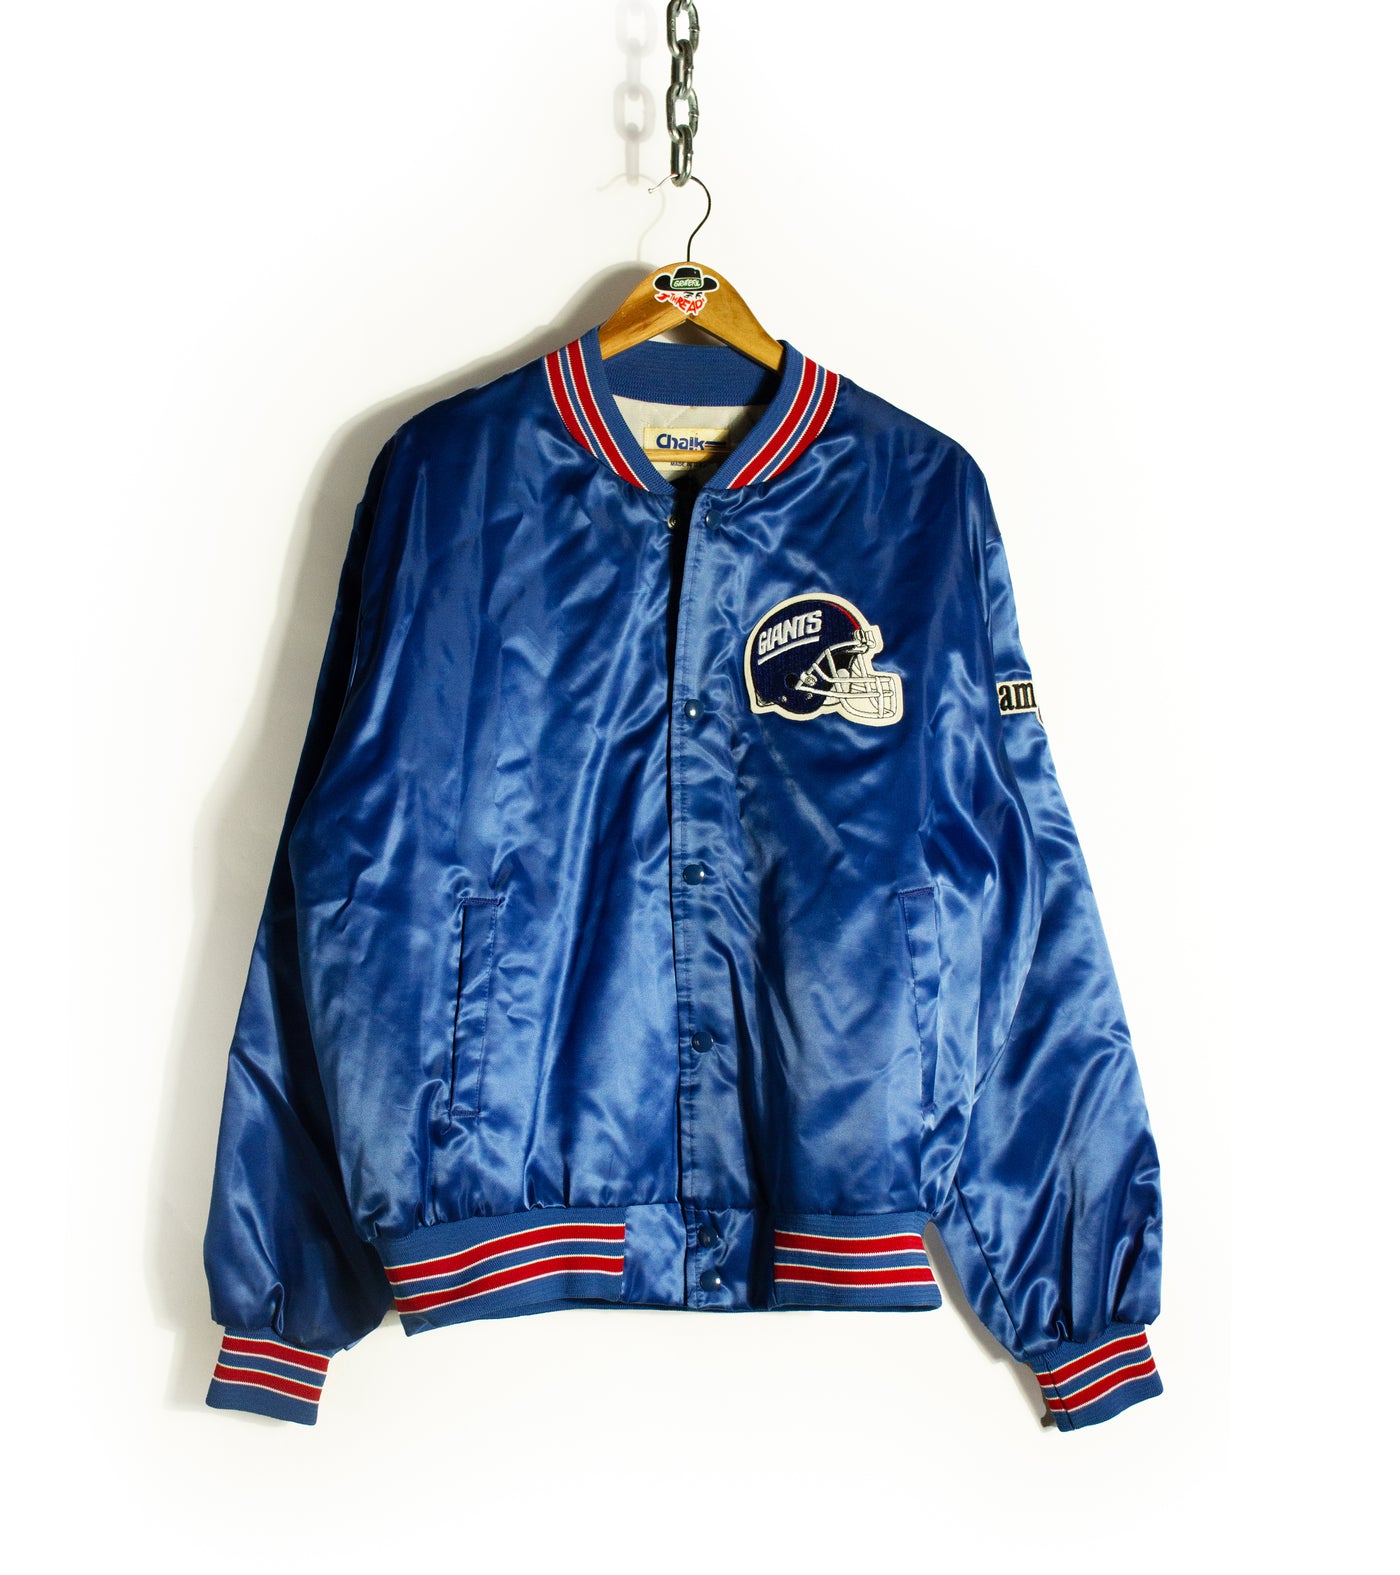 Vintage 80s Chalkline New York Giants Satin Bomber Jacket